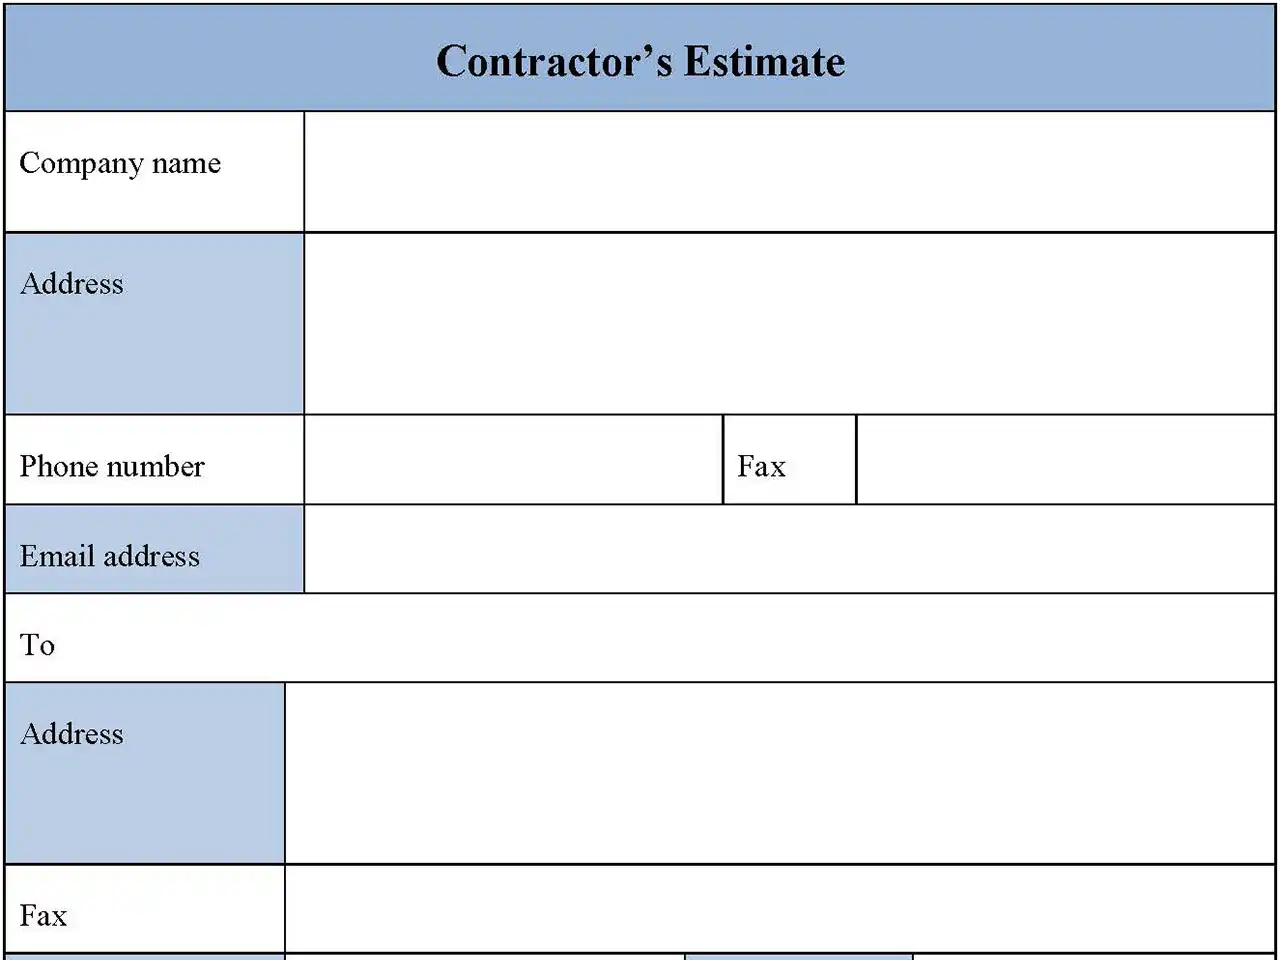 Contractors Estimate Form